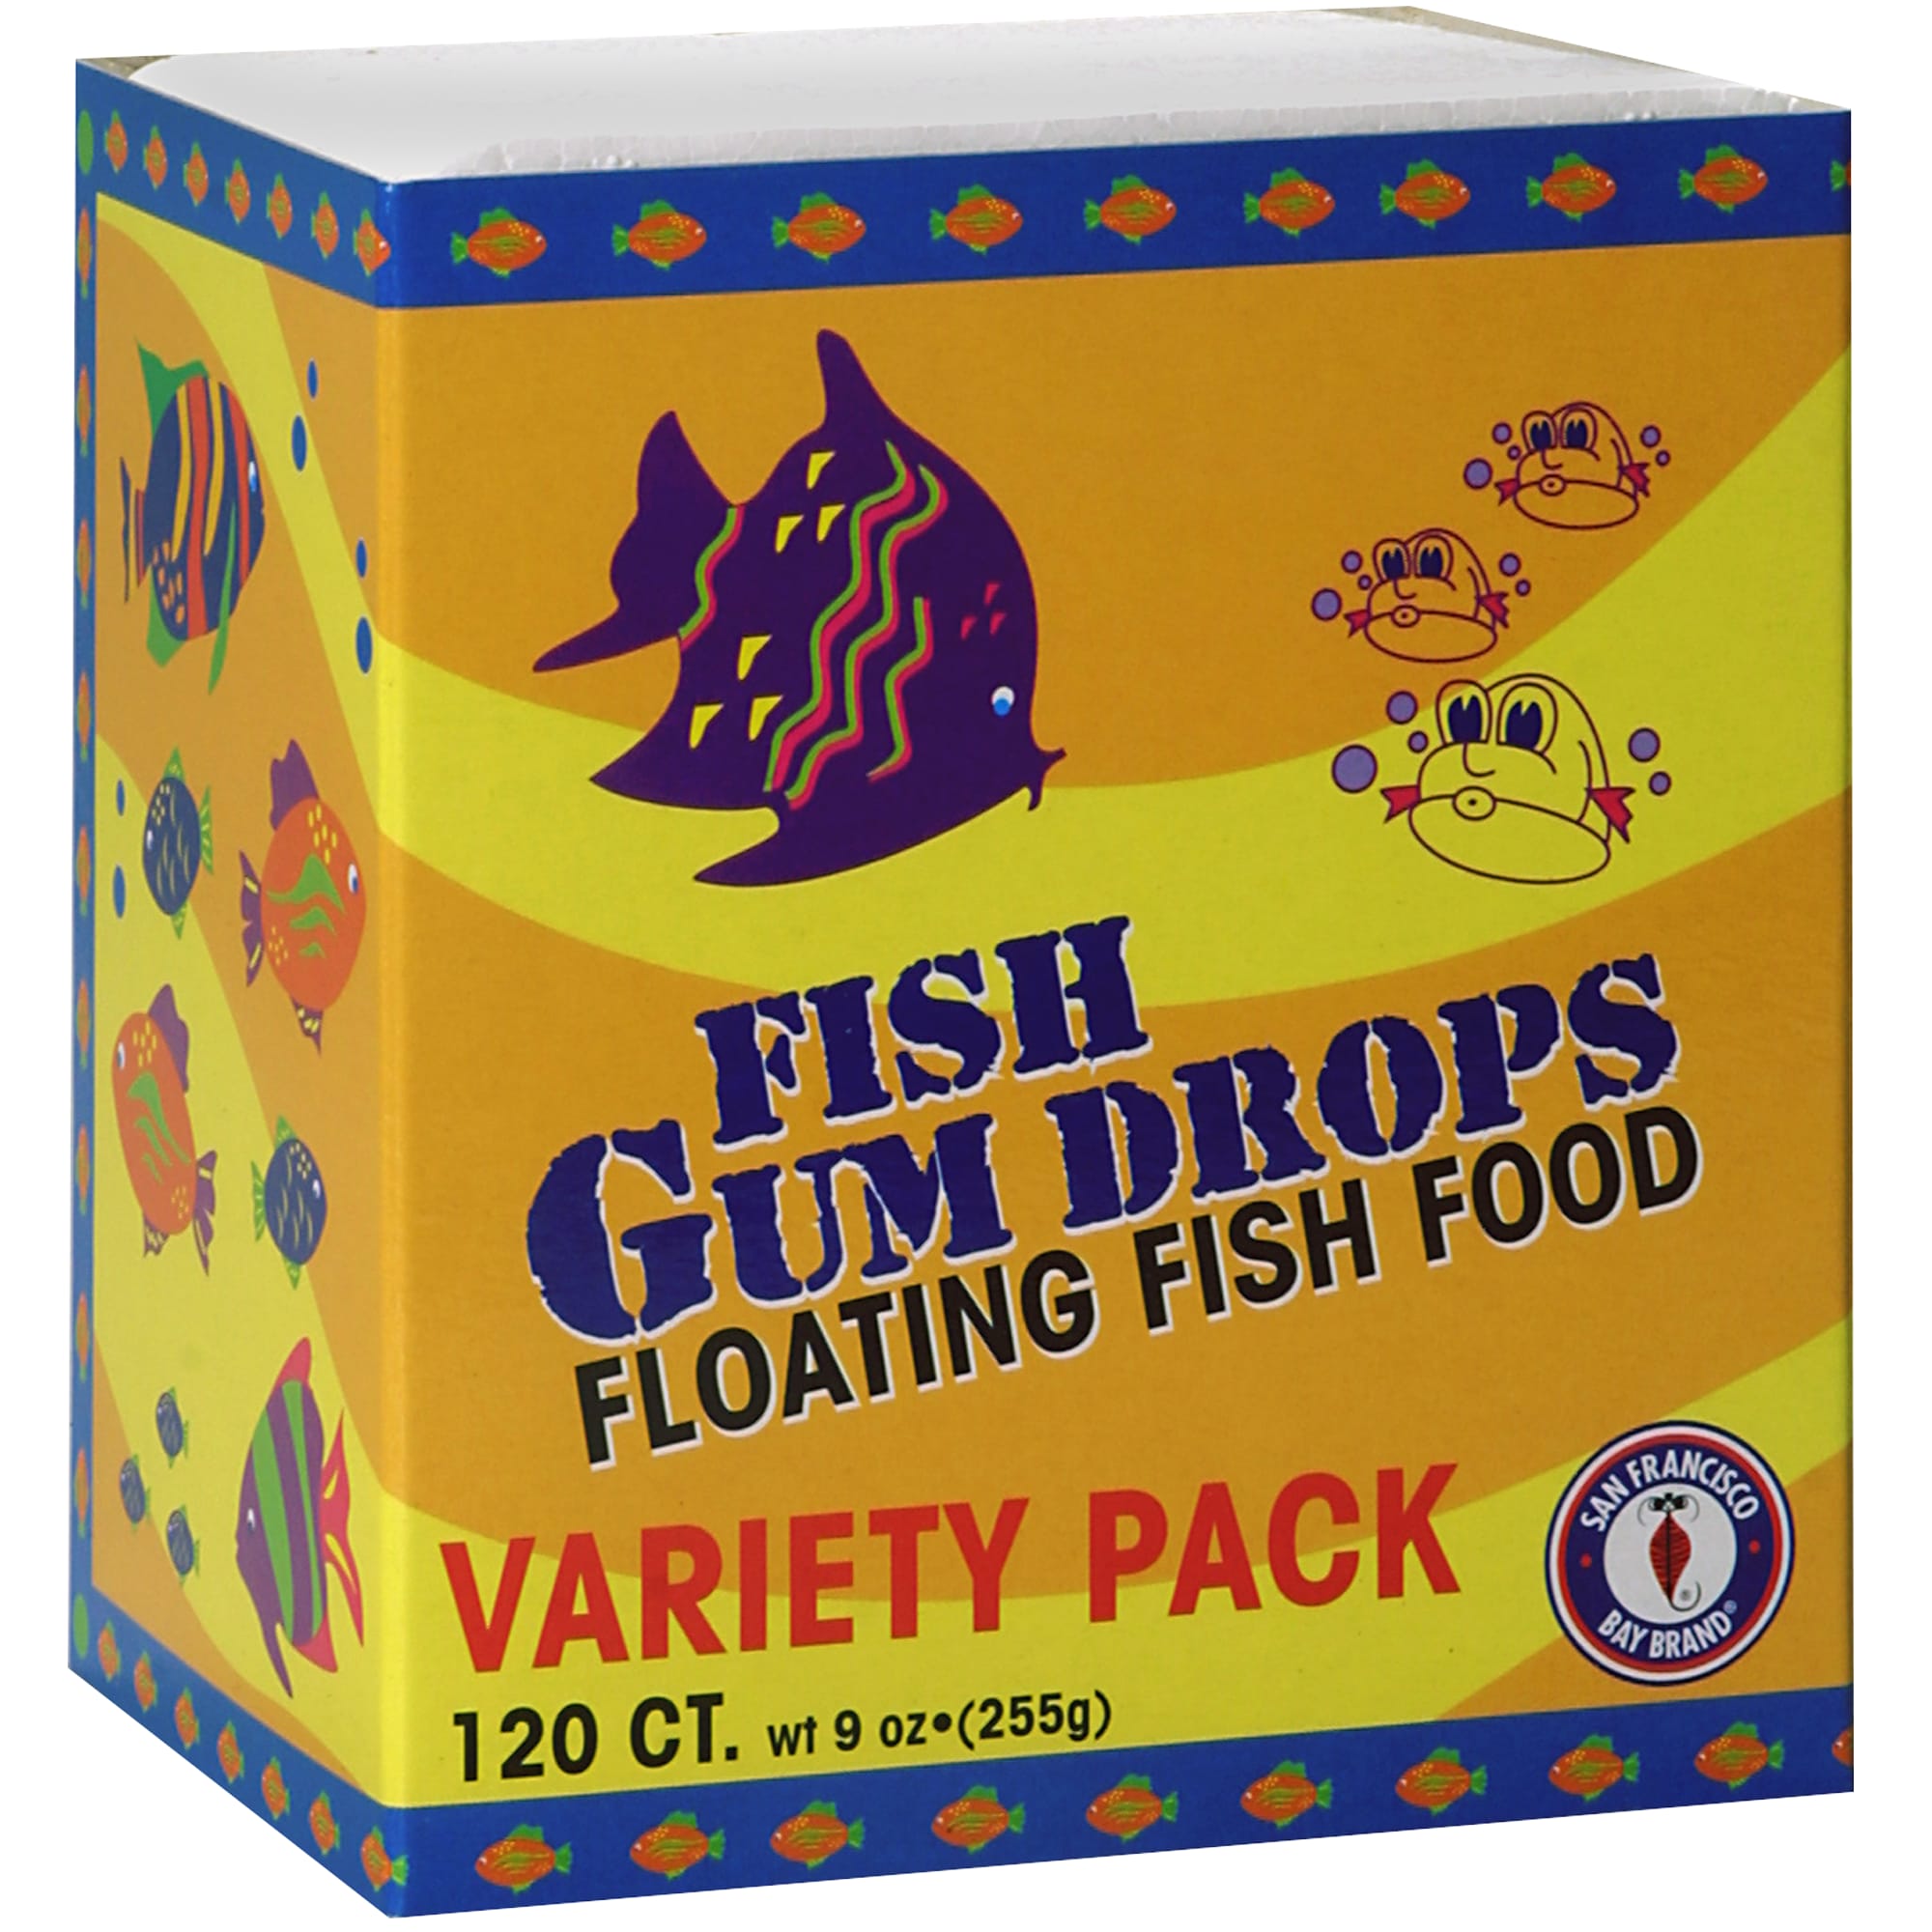 San Francisco Bay Brand Frozen Gumdrops Floating Fish Food Variety Pack,  120 Ct